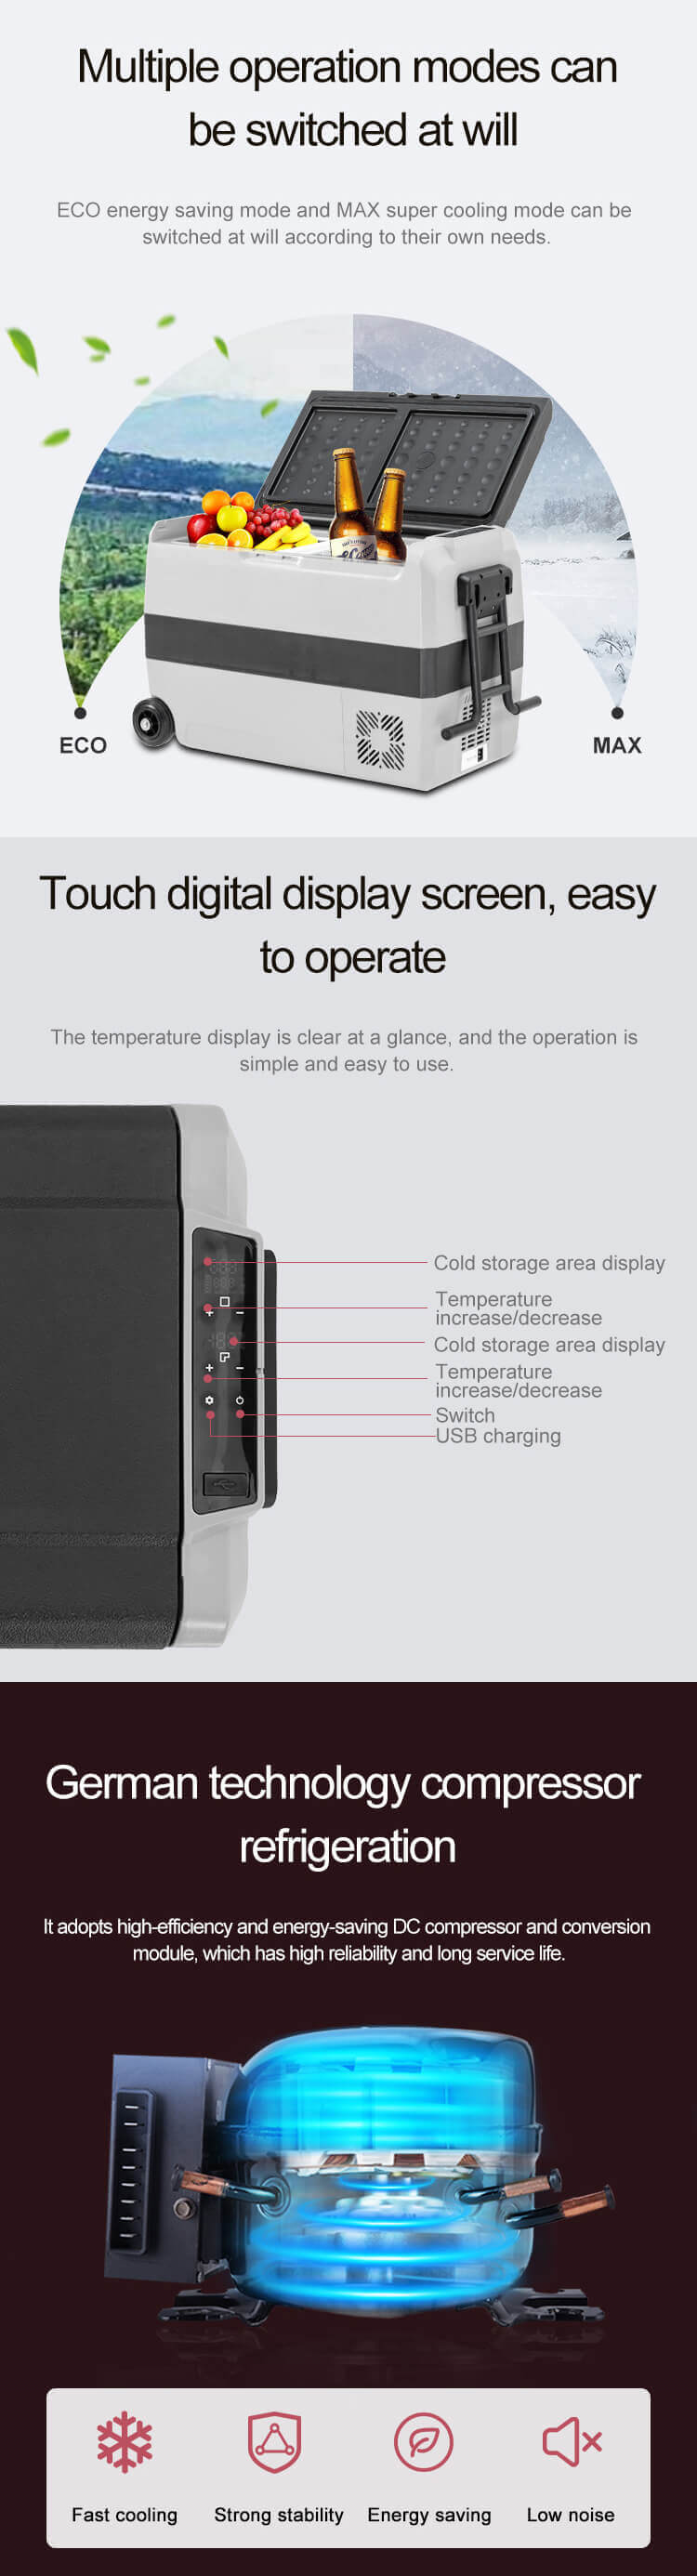 Alpicool T36/50/60L Portable Outdoor Camping Refrigerator Car Fridges with  Wheels – BetiLife™